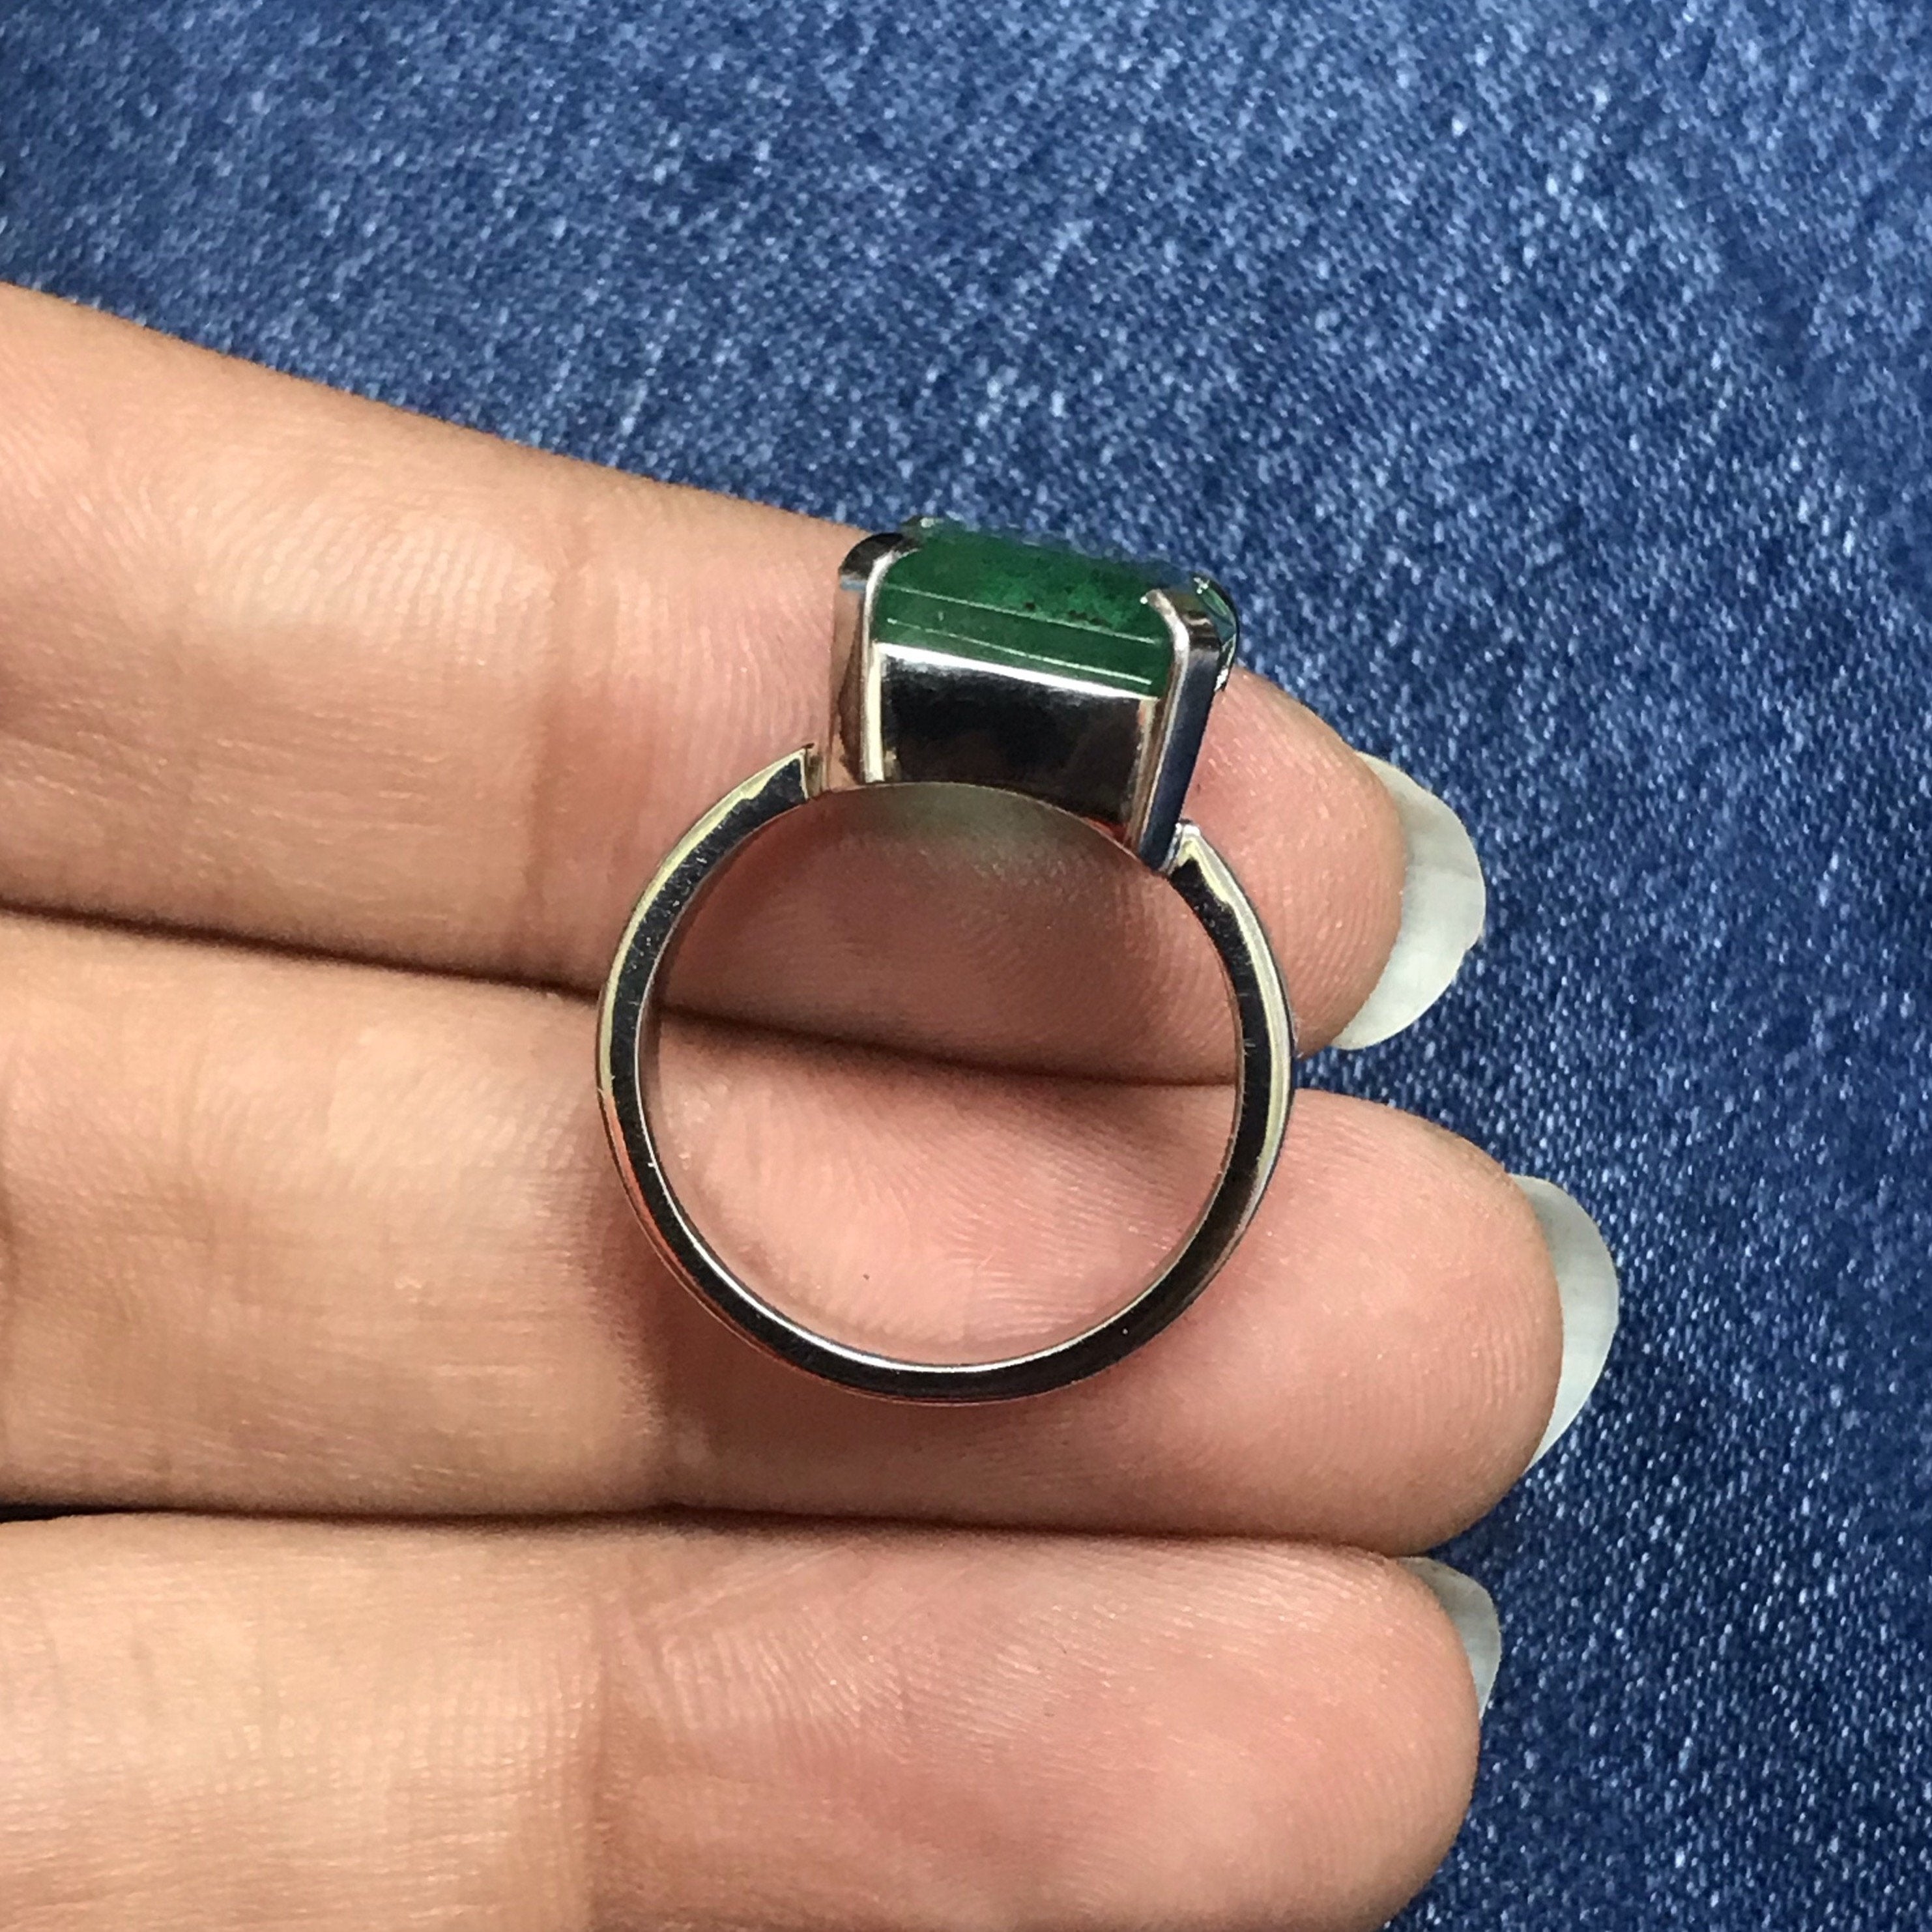 Customised Platinum Ring with Emerald   Jewelove